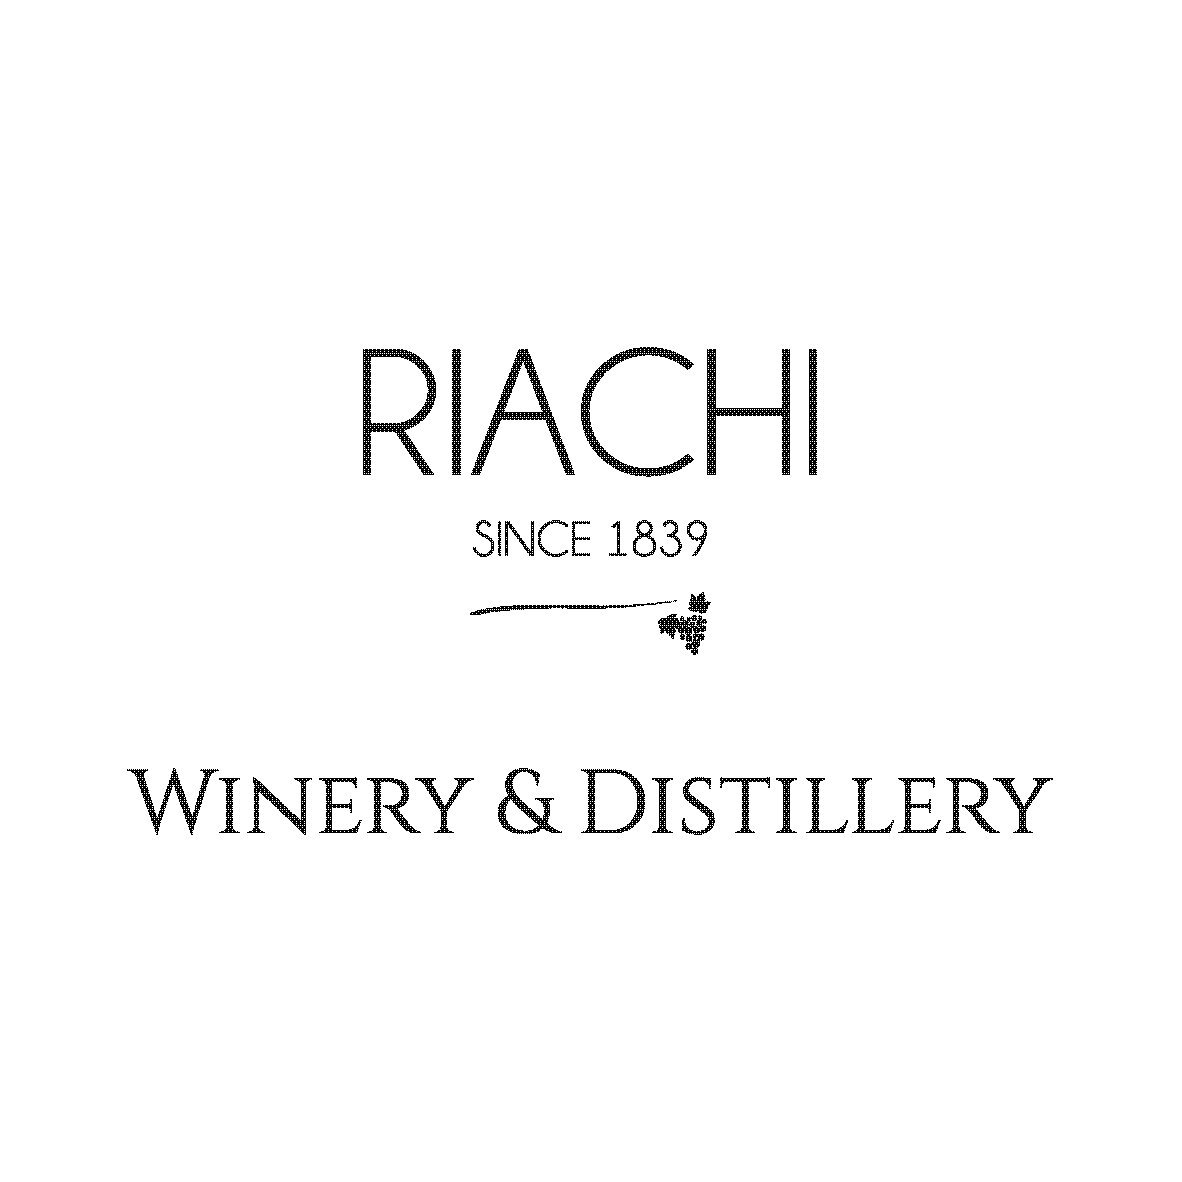 Riachi Winery & Distillery